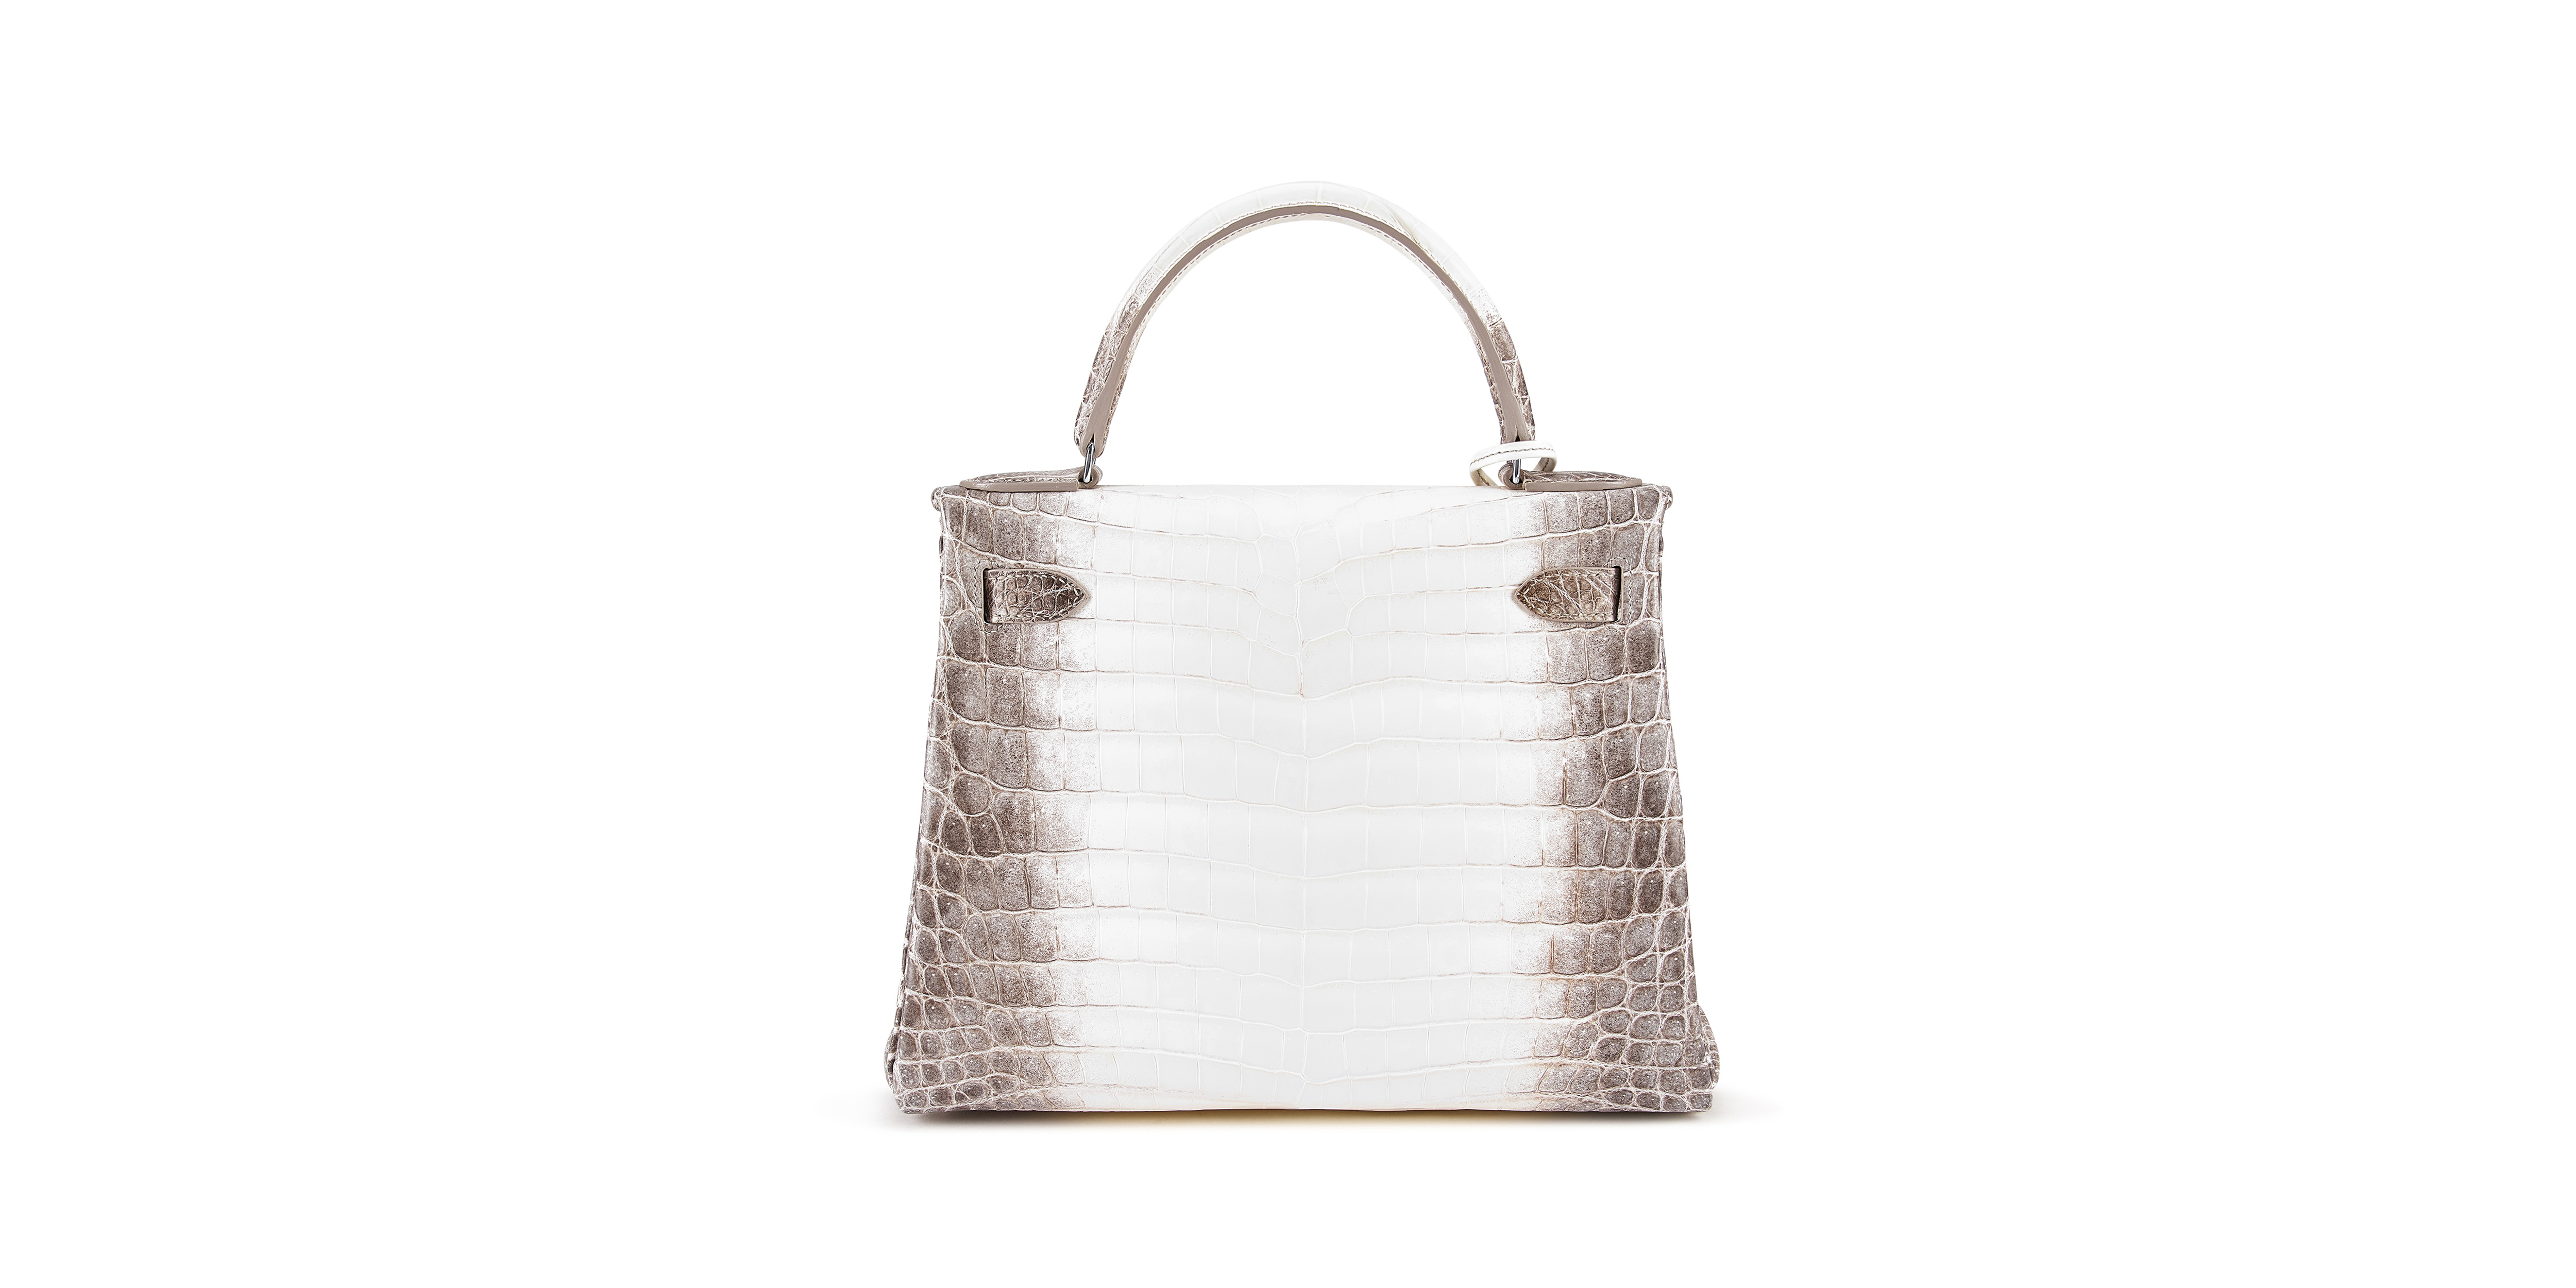 Meet the Hermès Himalaya Diamond Kelly in size 28. Which handbag is o